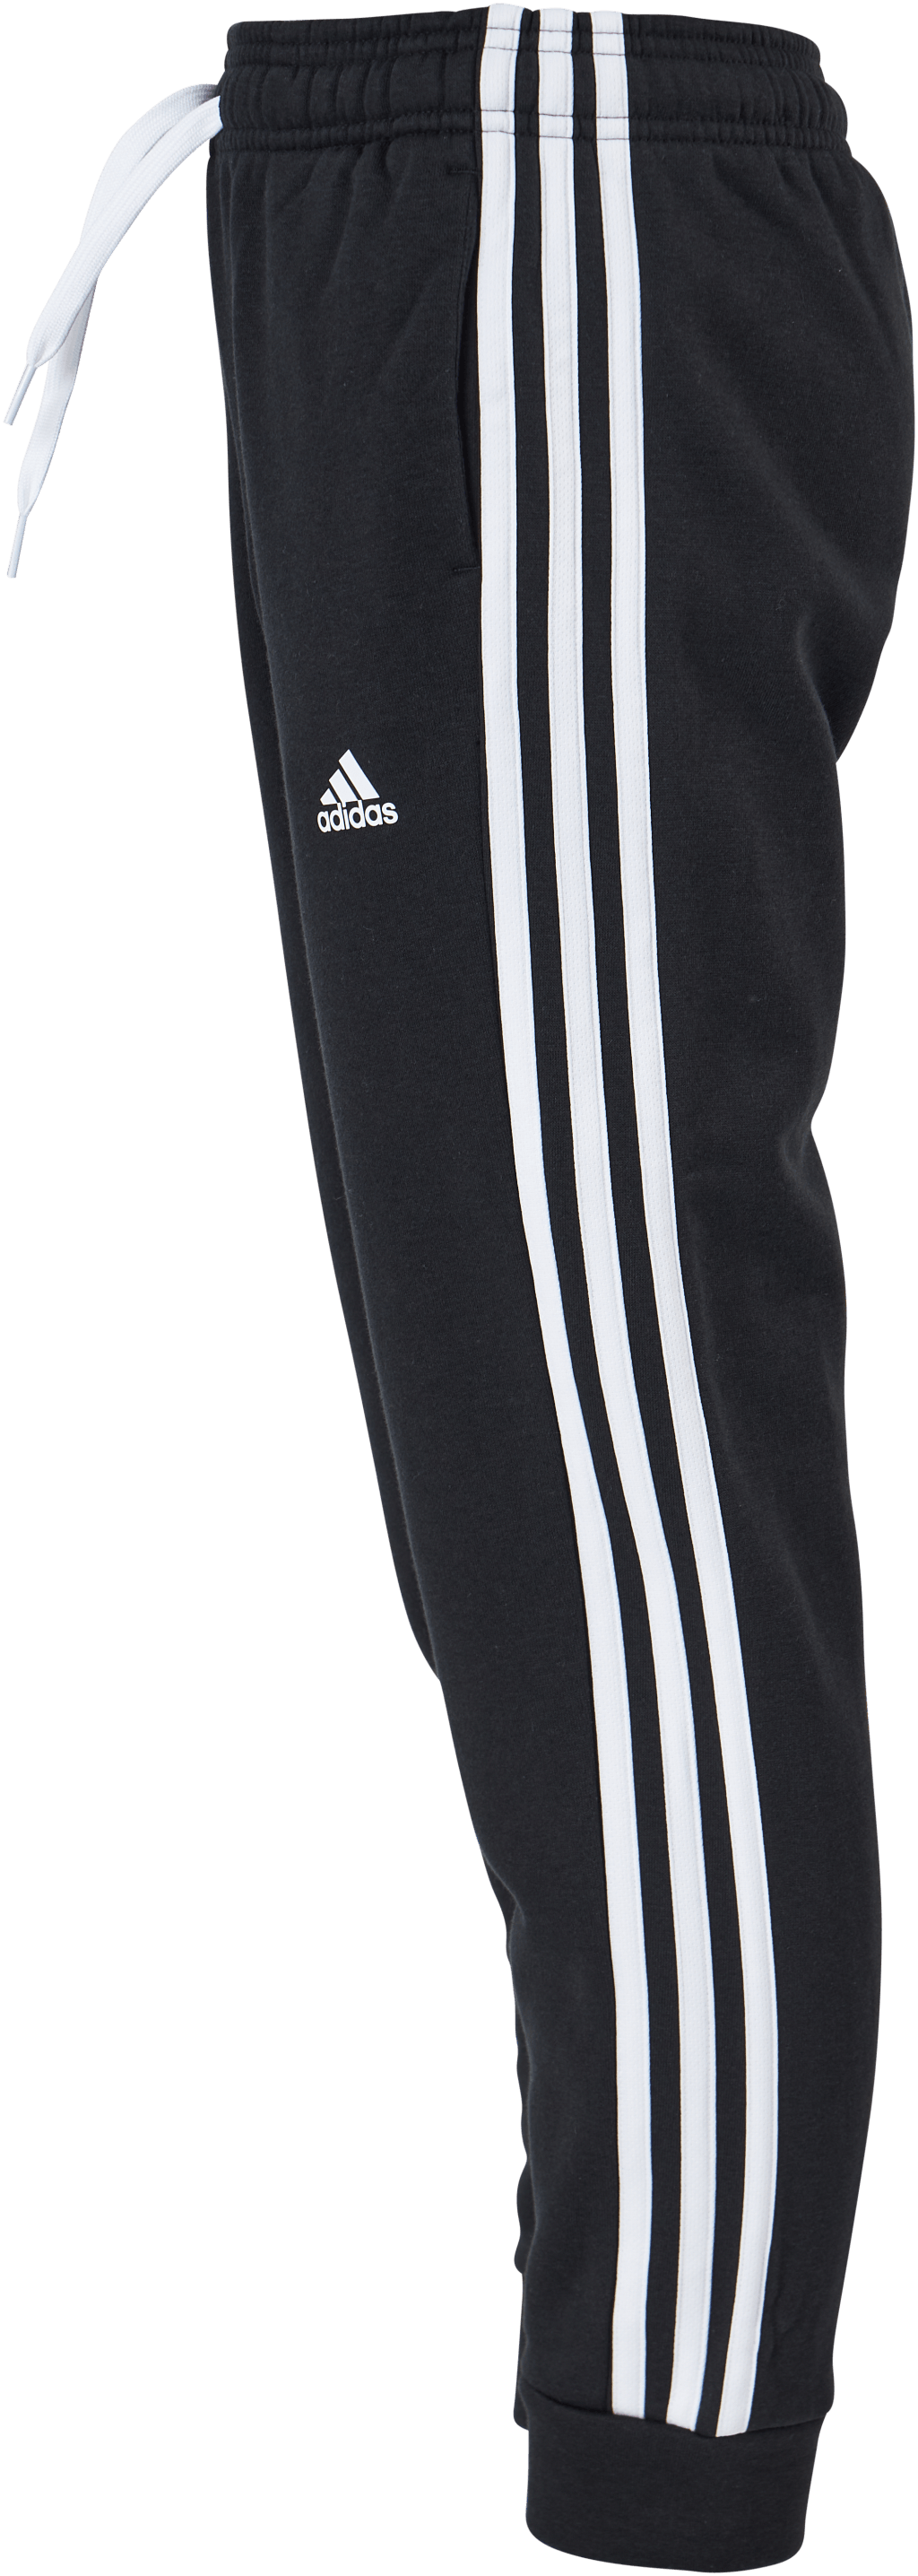 Adidas Boys Essentials 3 Stripes Pant Black / White